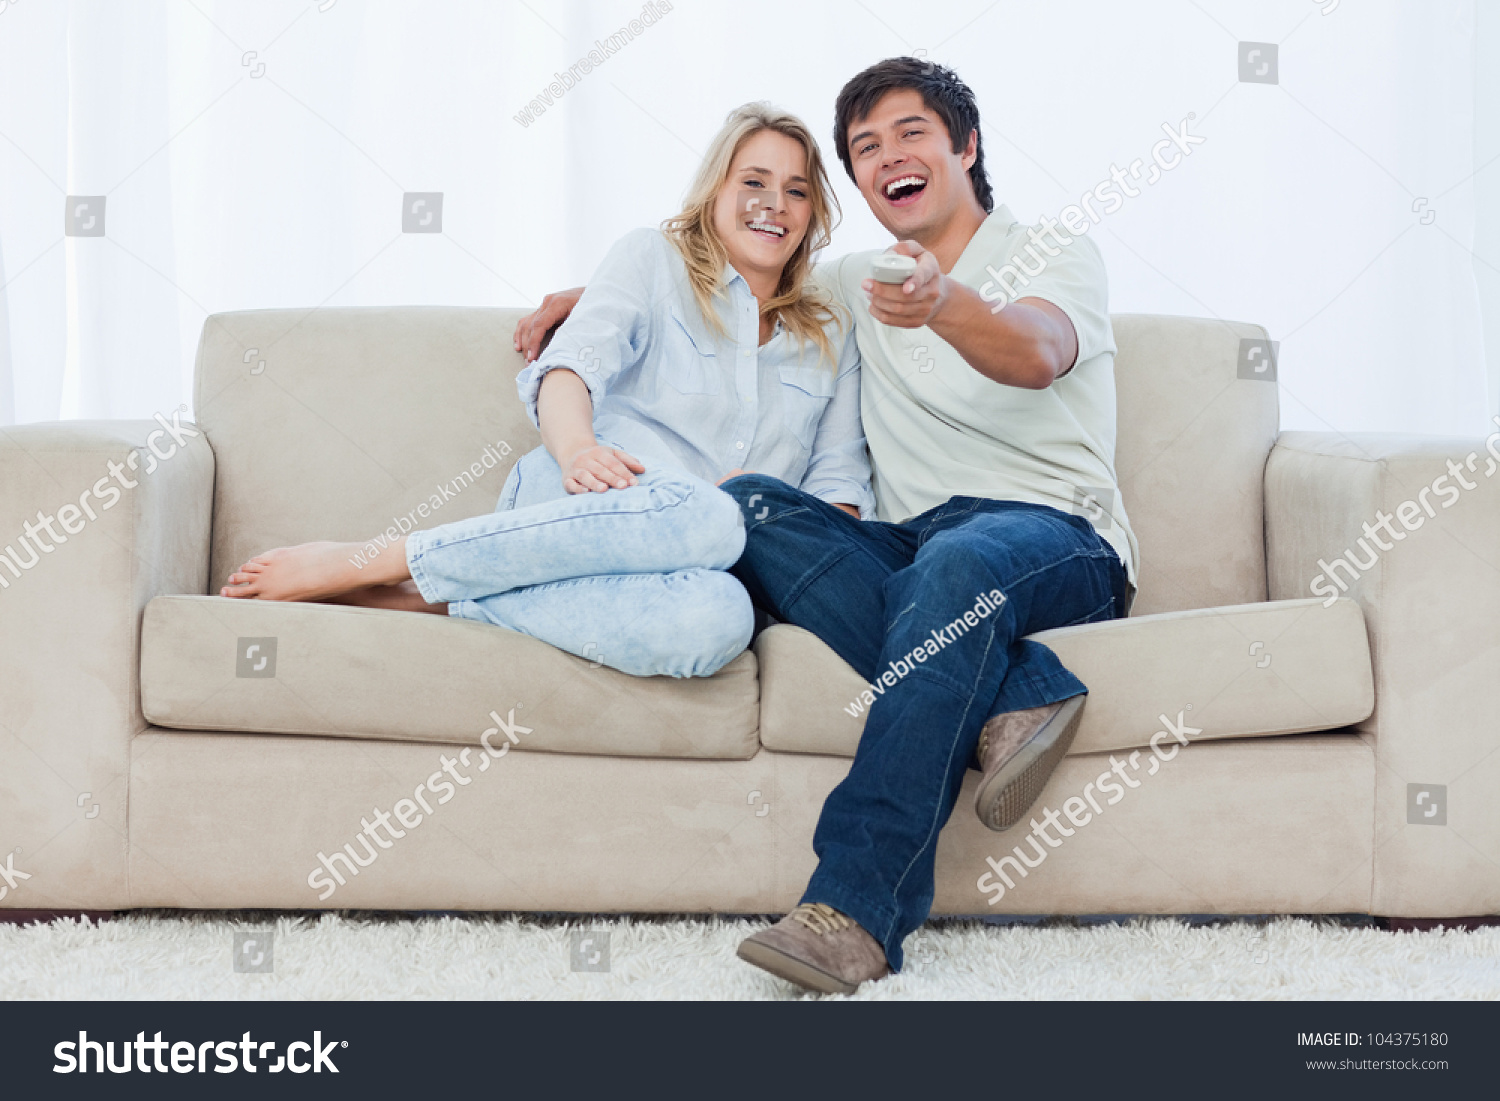 Парочка на белом диване крокус. Два человека на диване. Люди в обнимку на диване. Парень и девушка сидят на диване. Сидят на диване в обнимку.